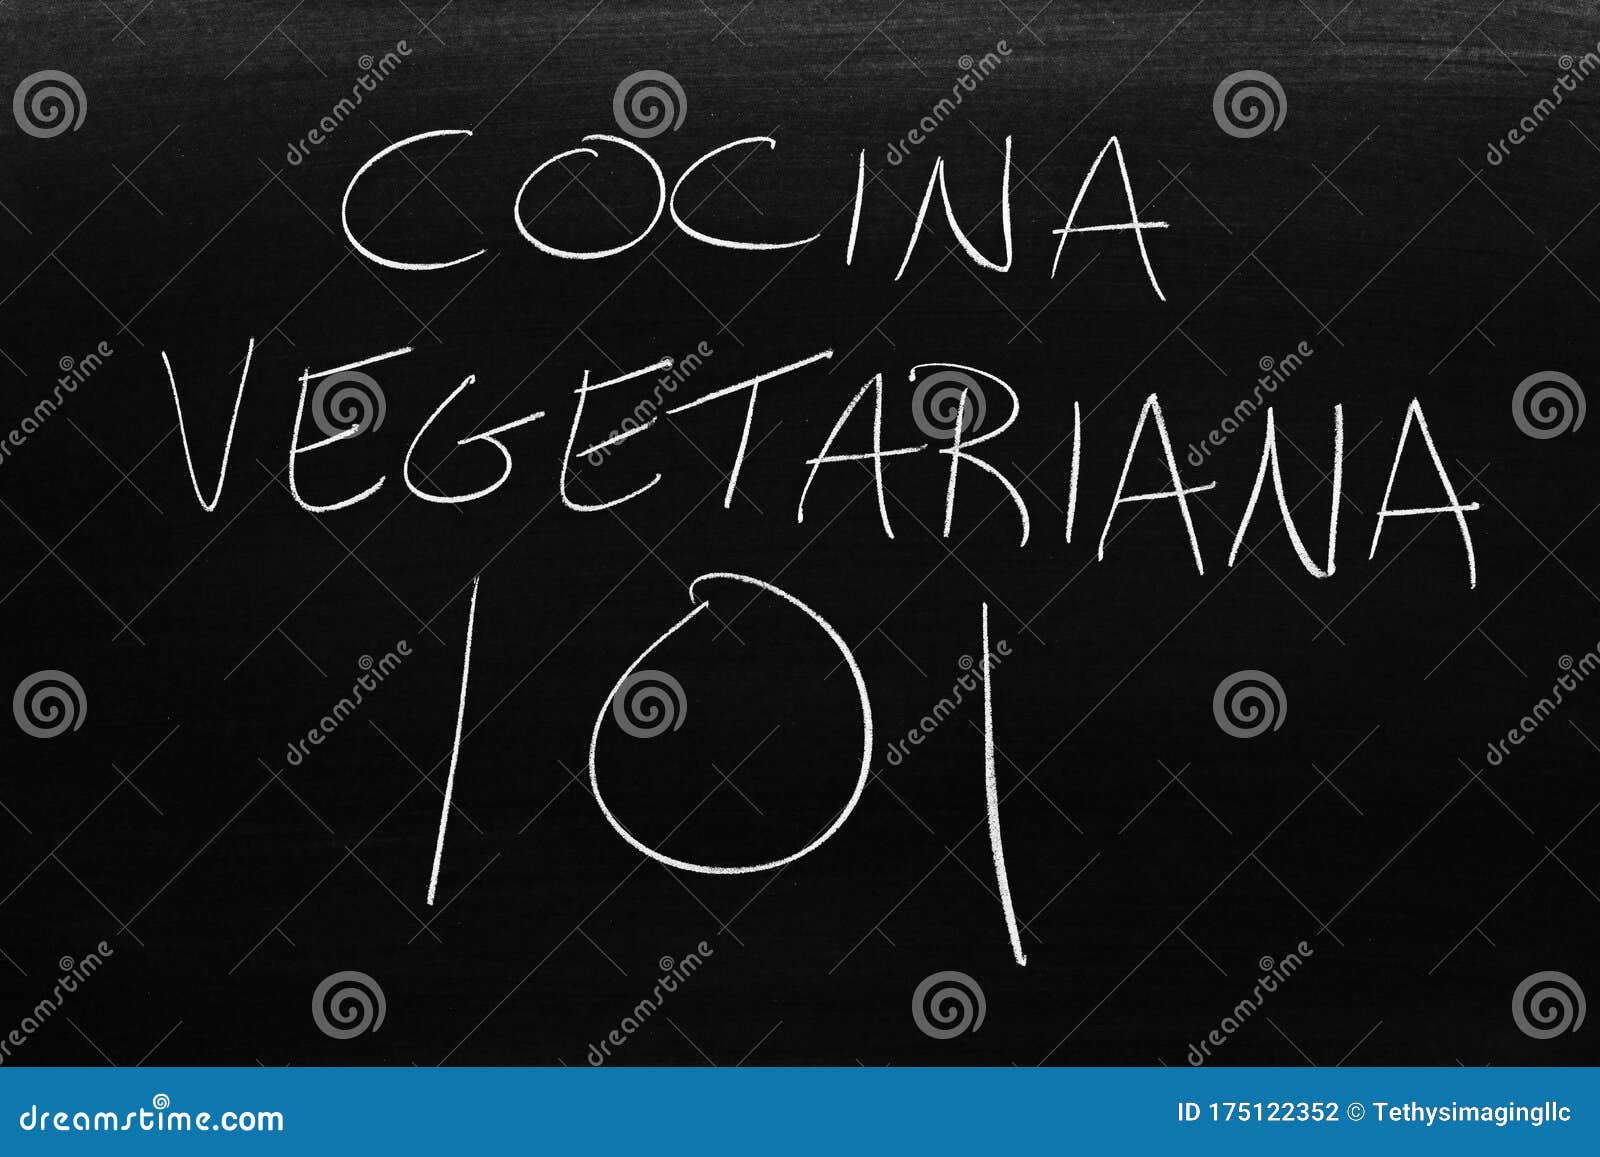 cocina vegetariana 101 on a blackboard.  translation: vegetarian cooking 101